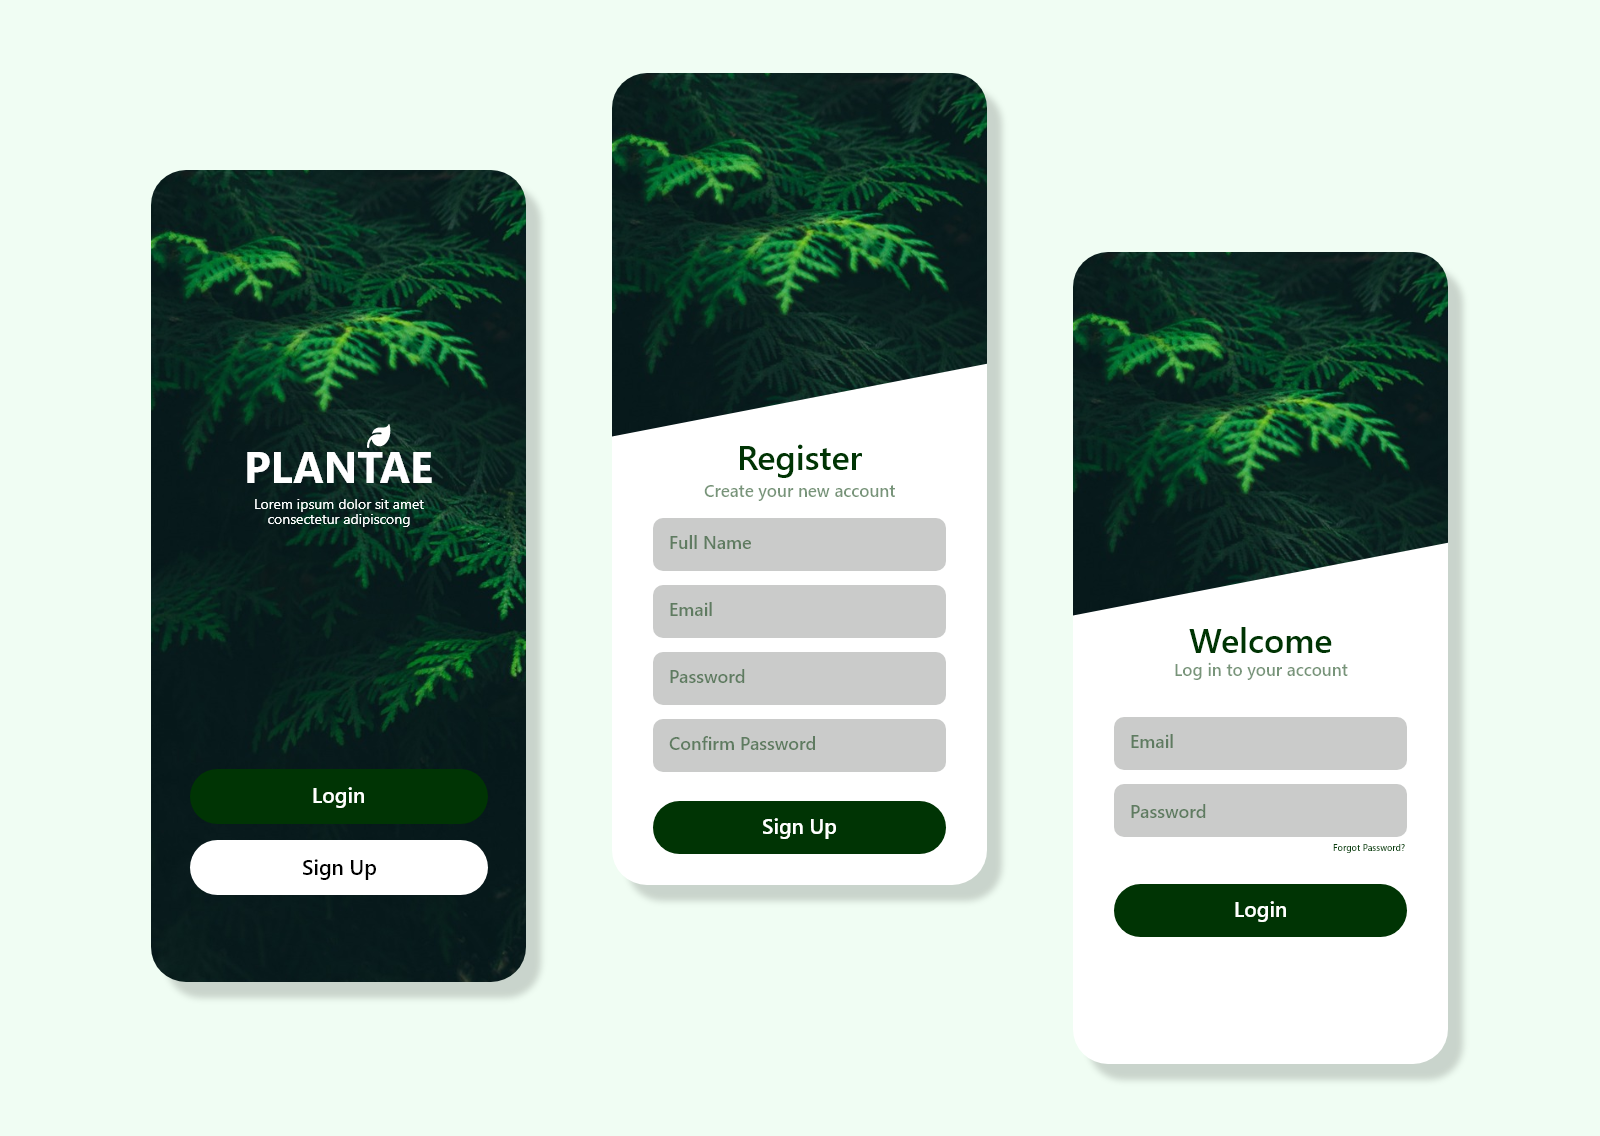 PLANTAE Plant App UI Design by Dasun Senanayake on Dribbble